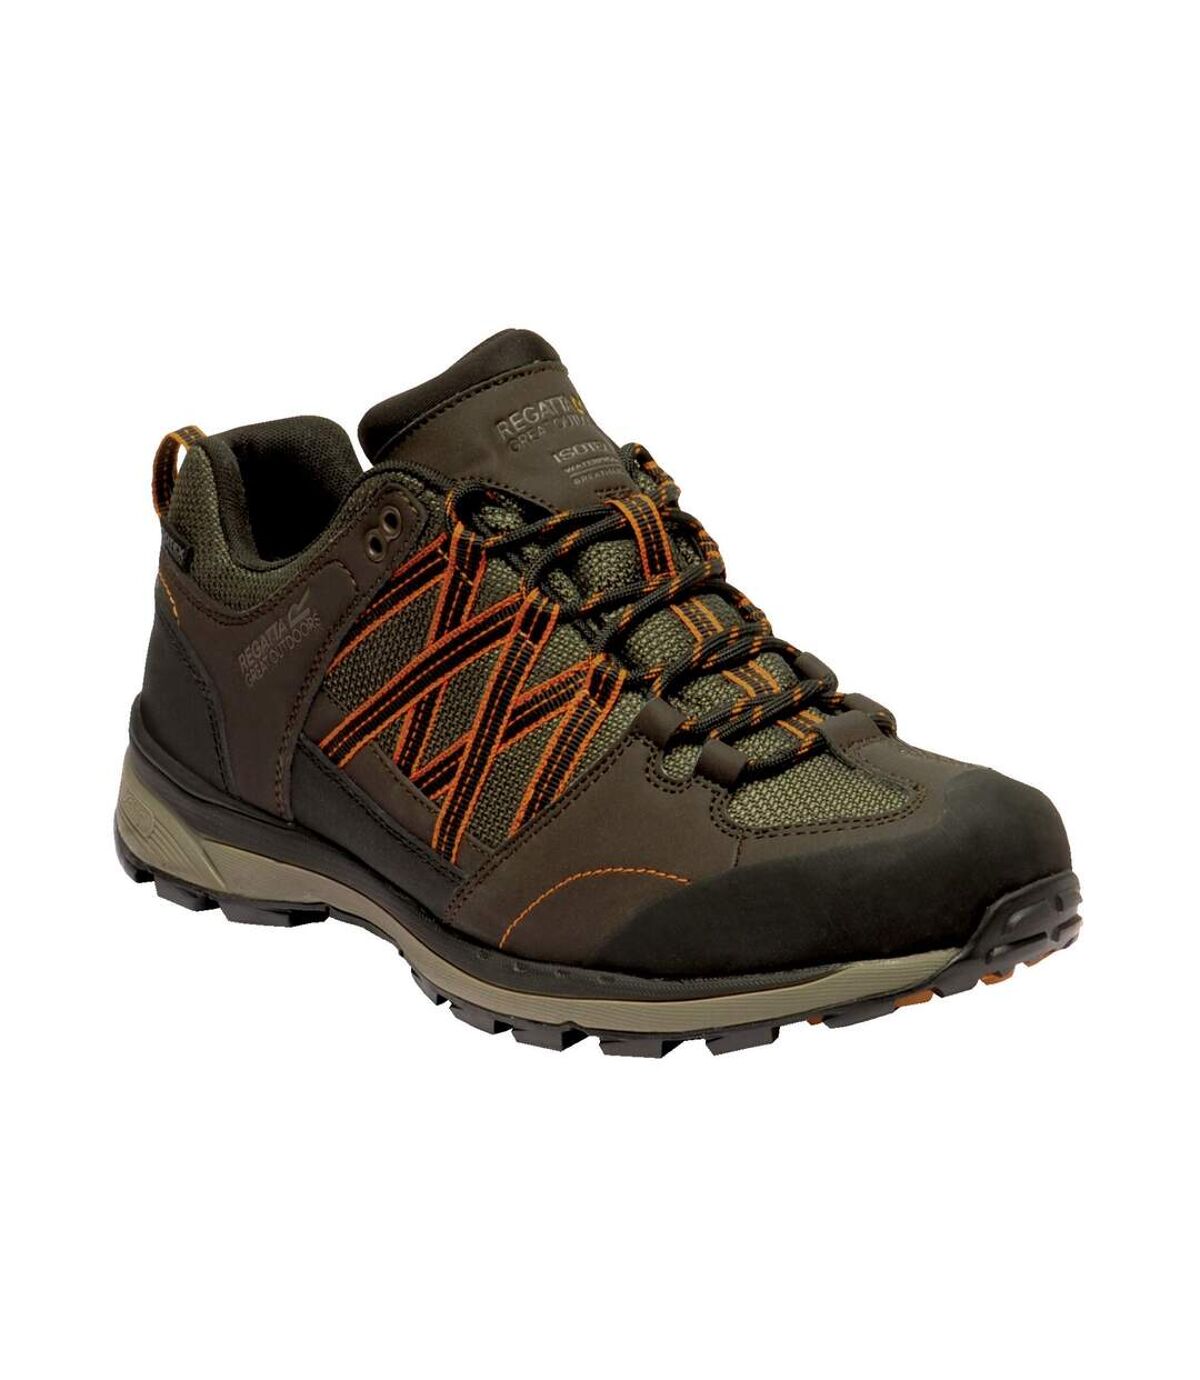 Regatta - Chaussures de randonnée SAMARIS - Homme (Marron/orange) - UTRG3276